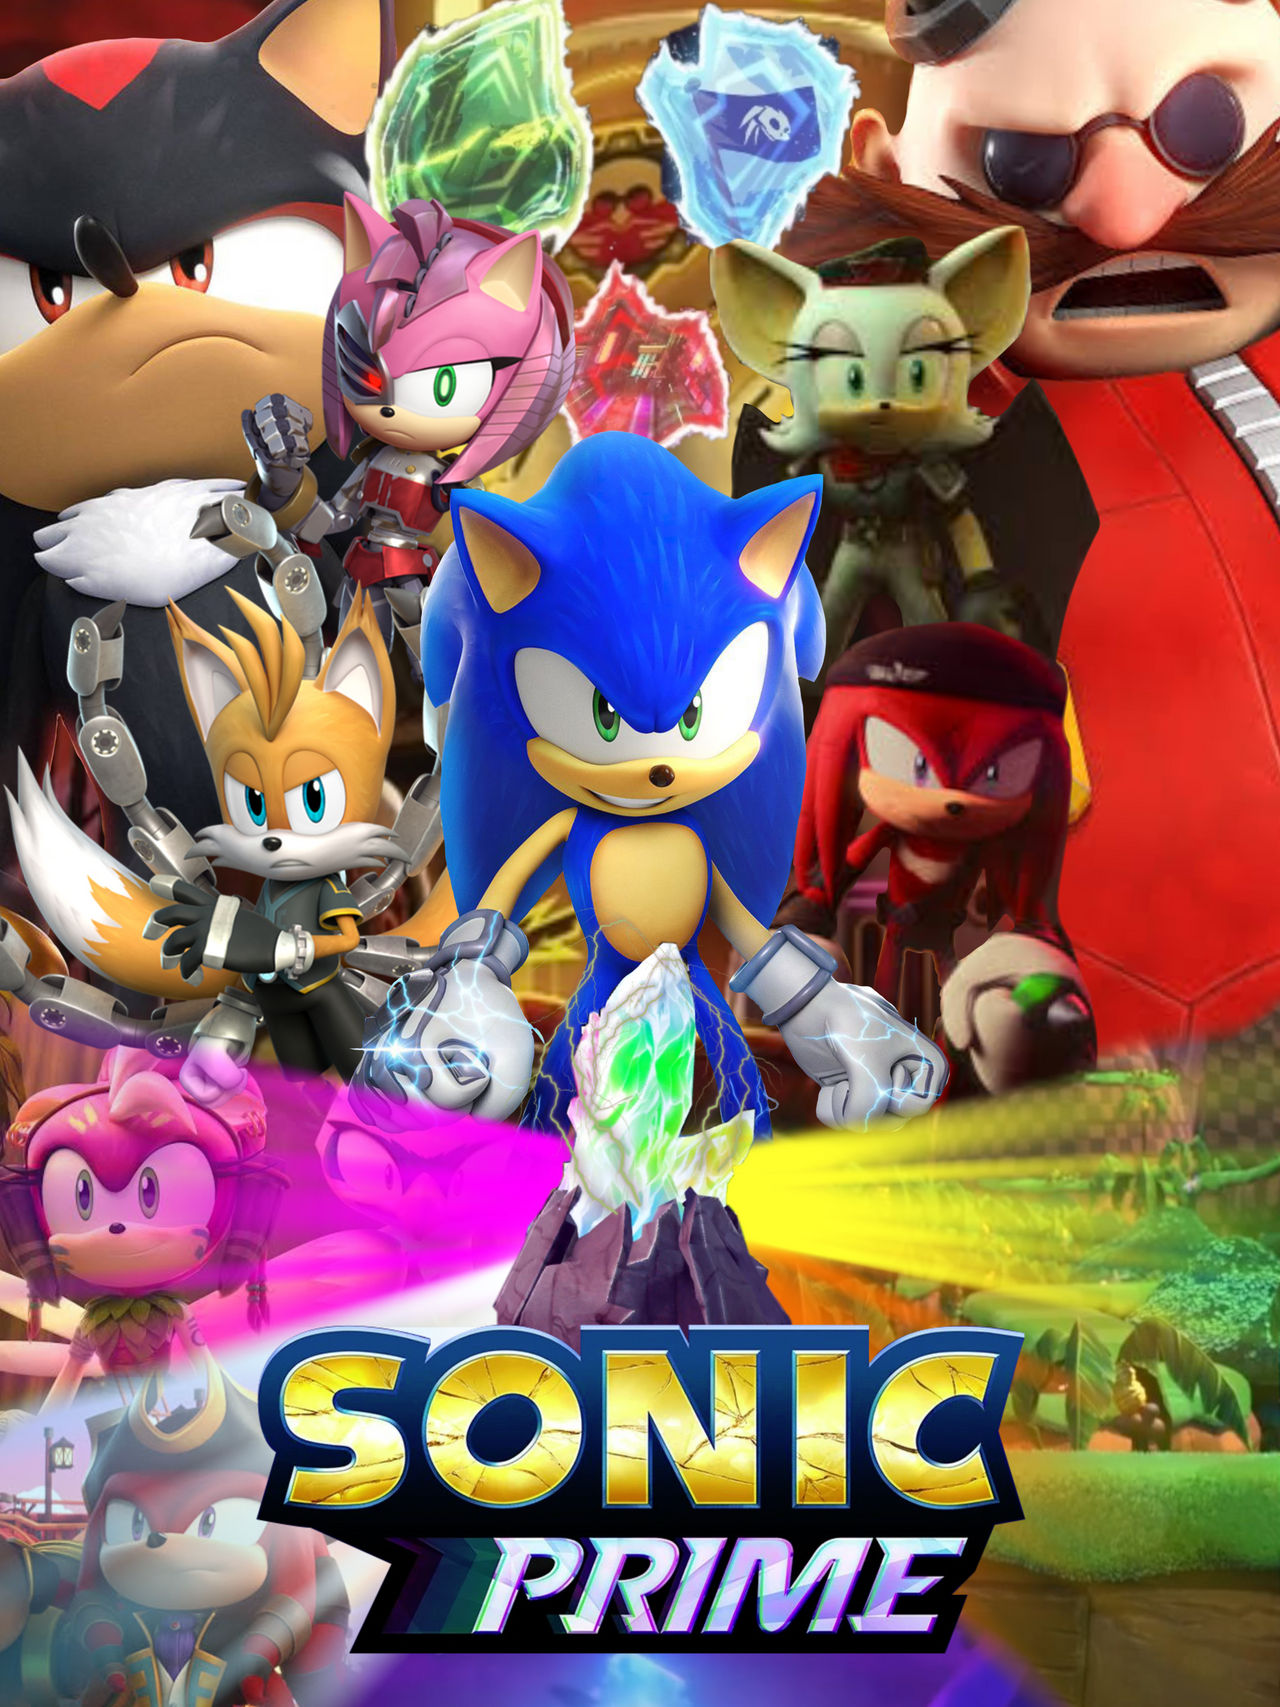 Sonic The Hedgehog 4 custom poster by Nikisawesom on DeviantArt